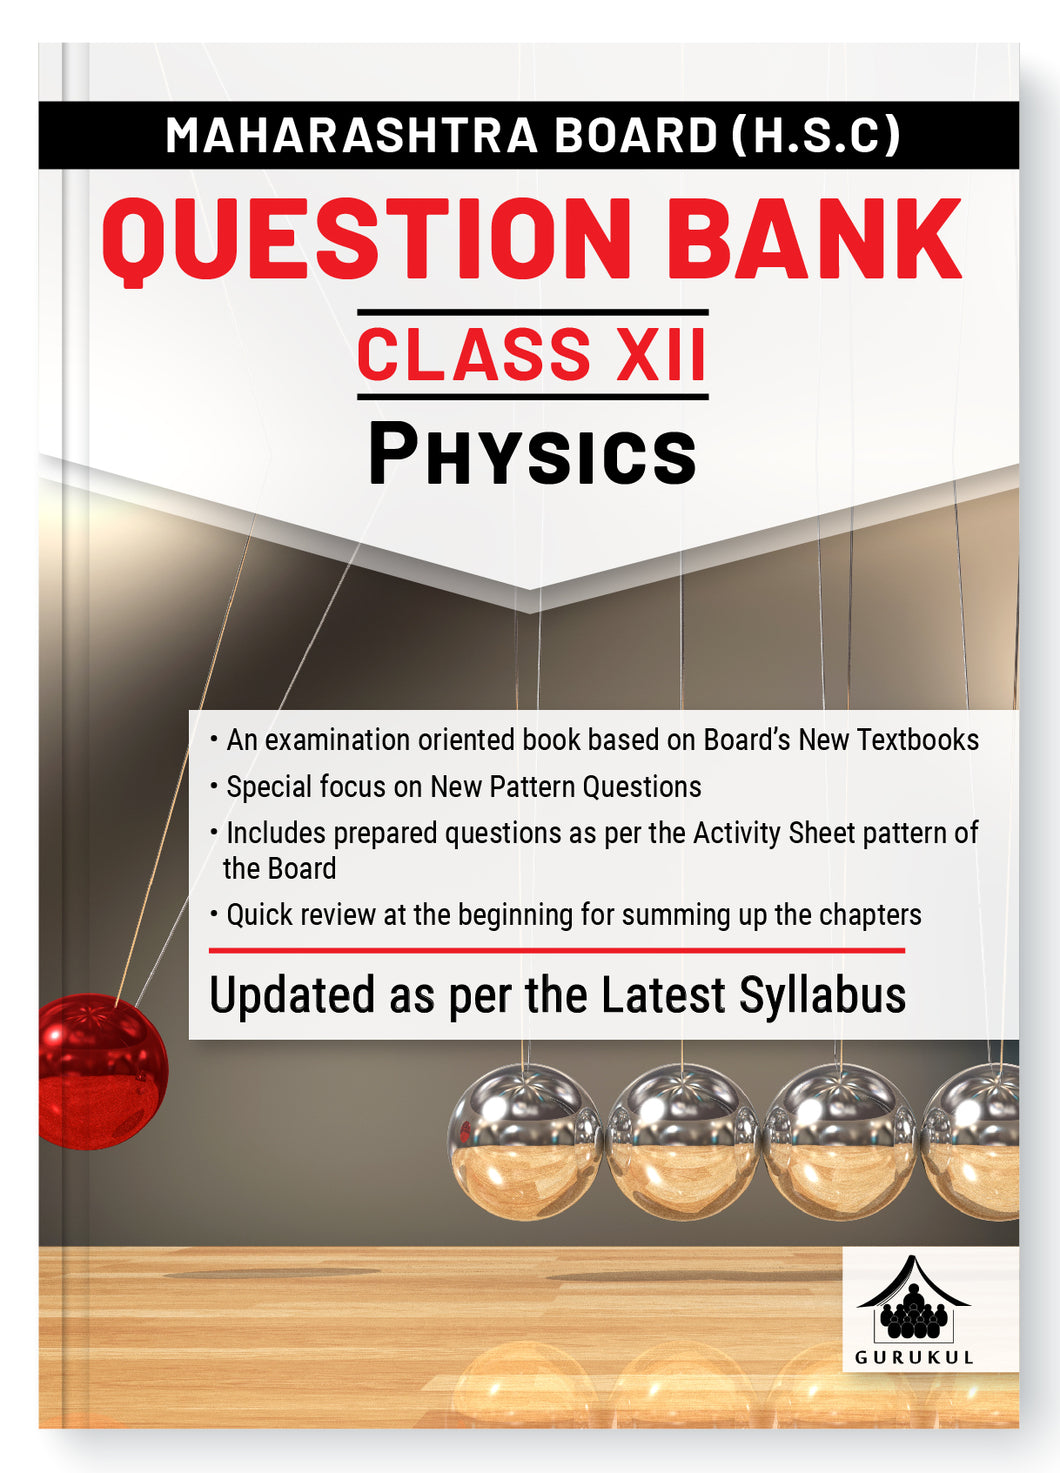 Gurukul H.S.C Physics Question Bank for MH Board Class 12